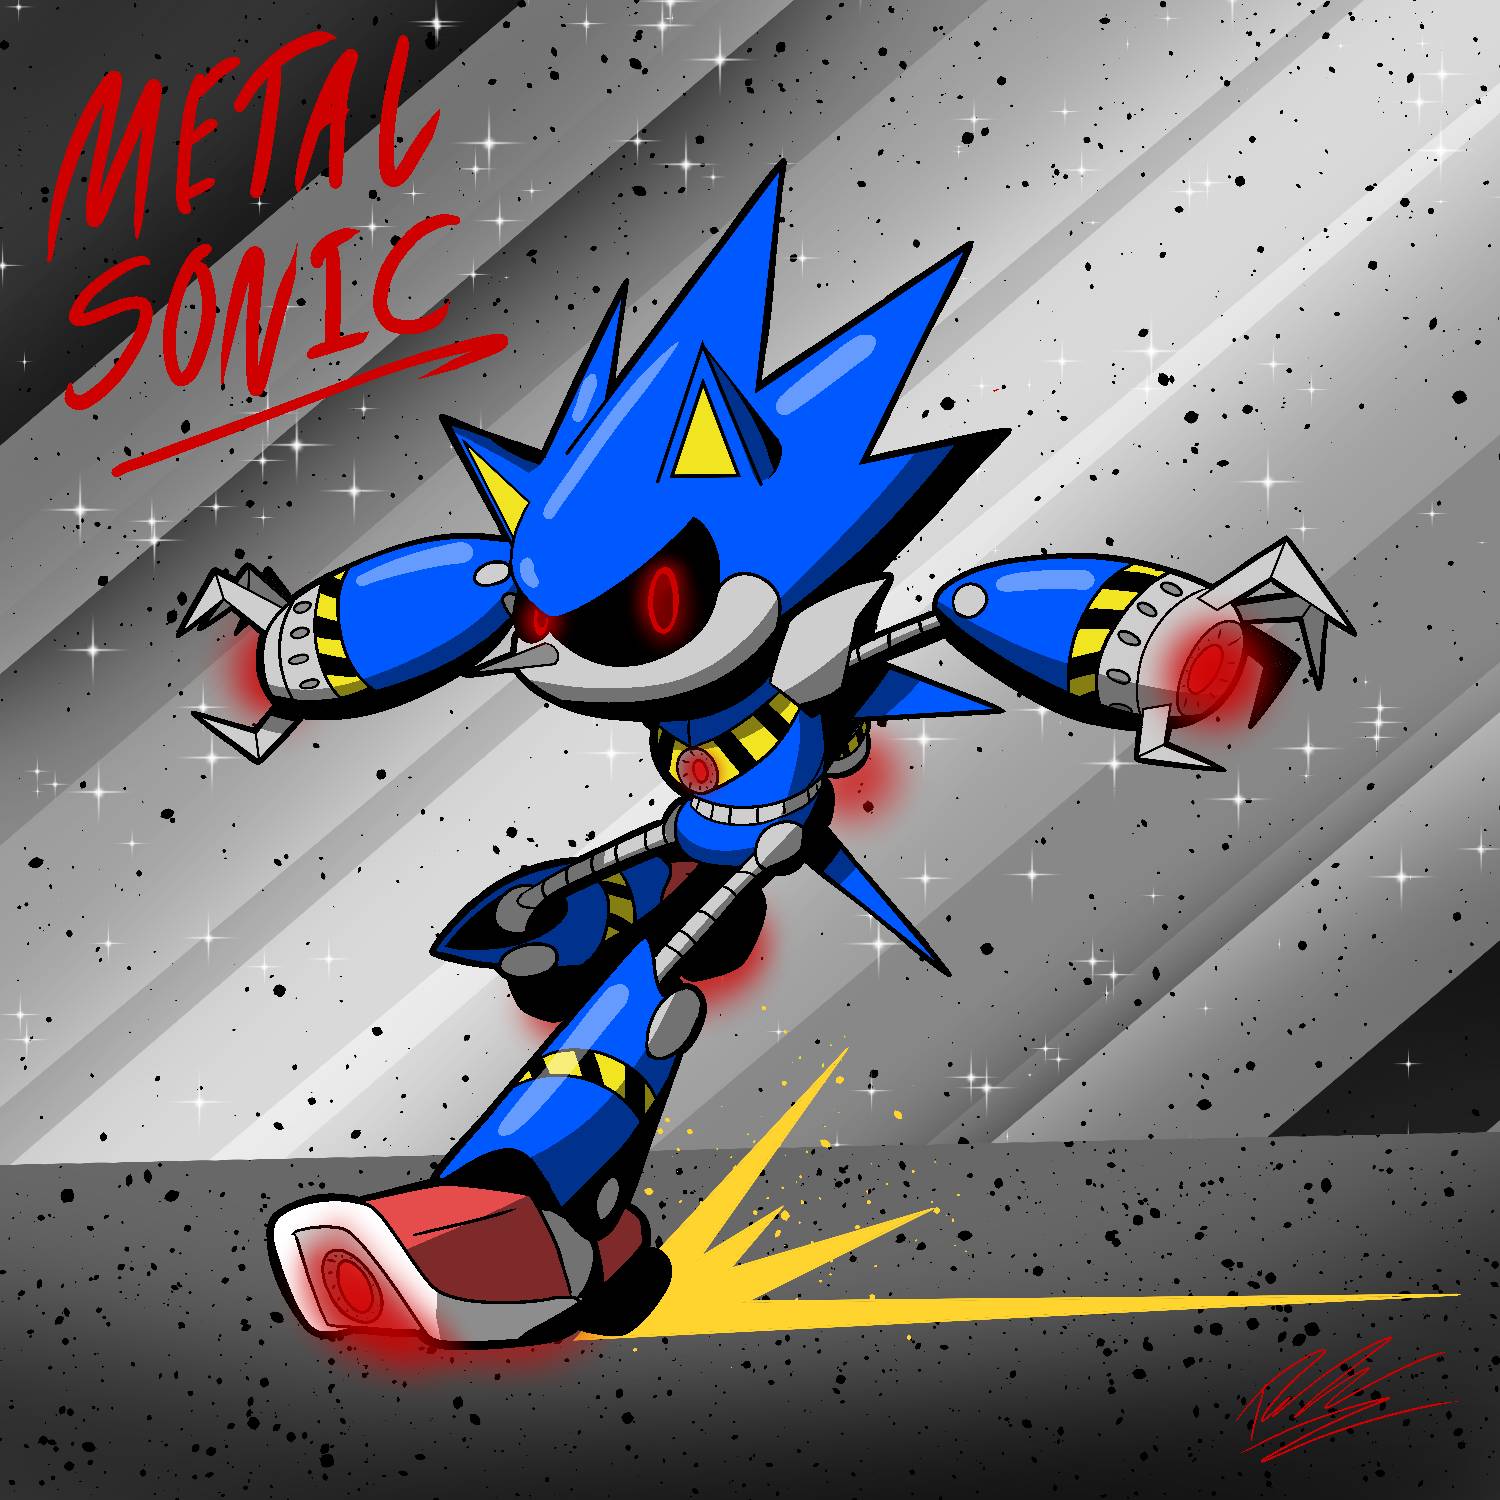 ArtStation - Comic styled Metal Sonic